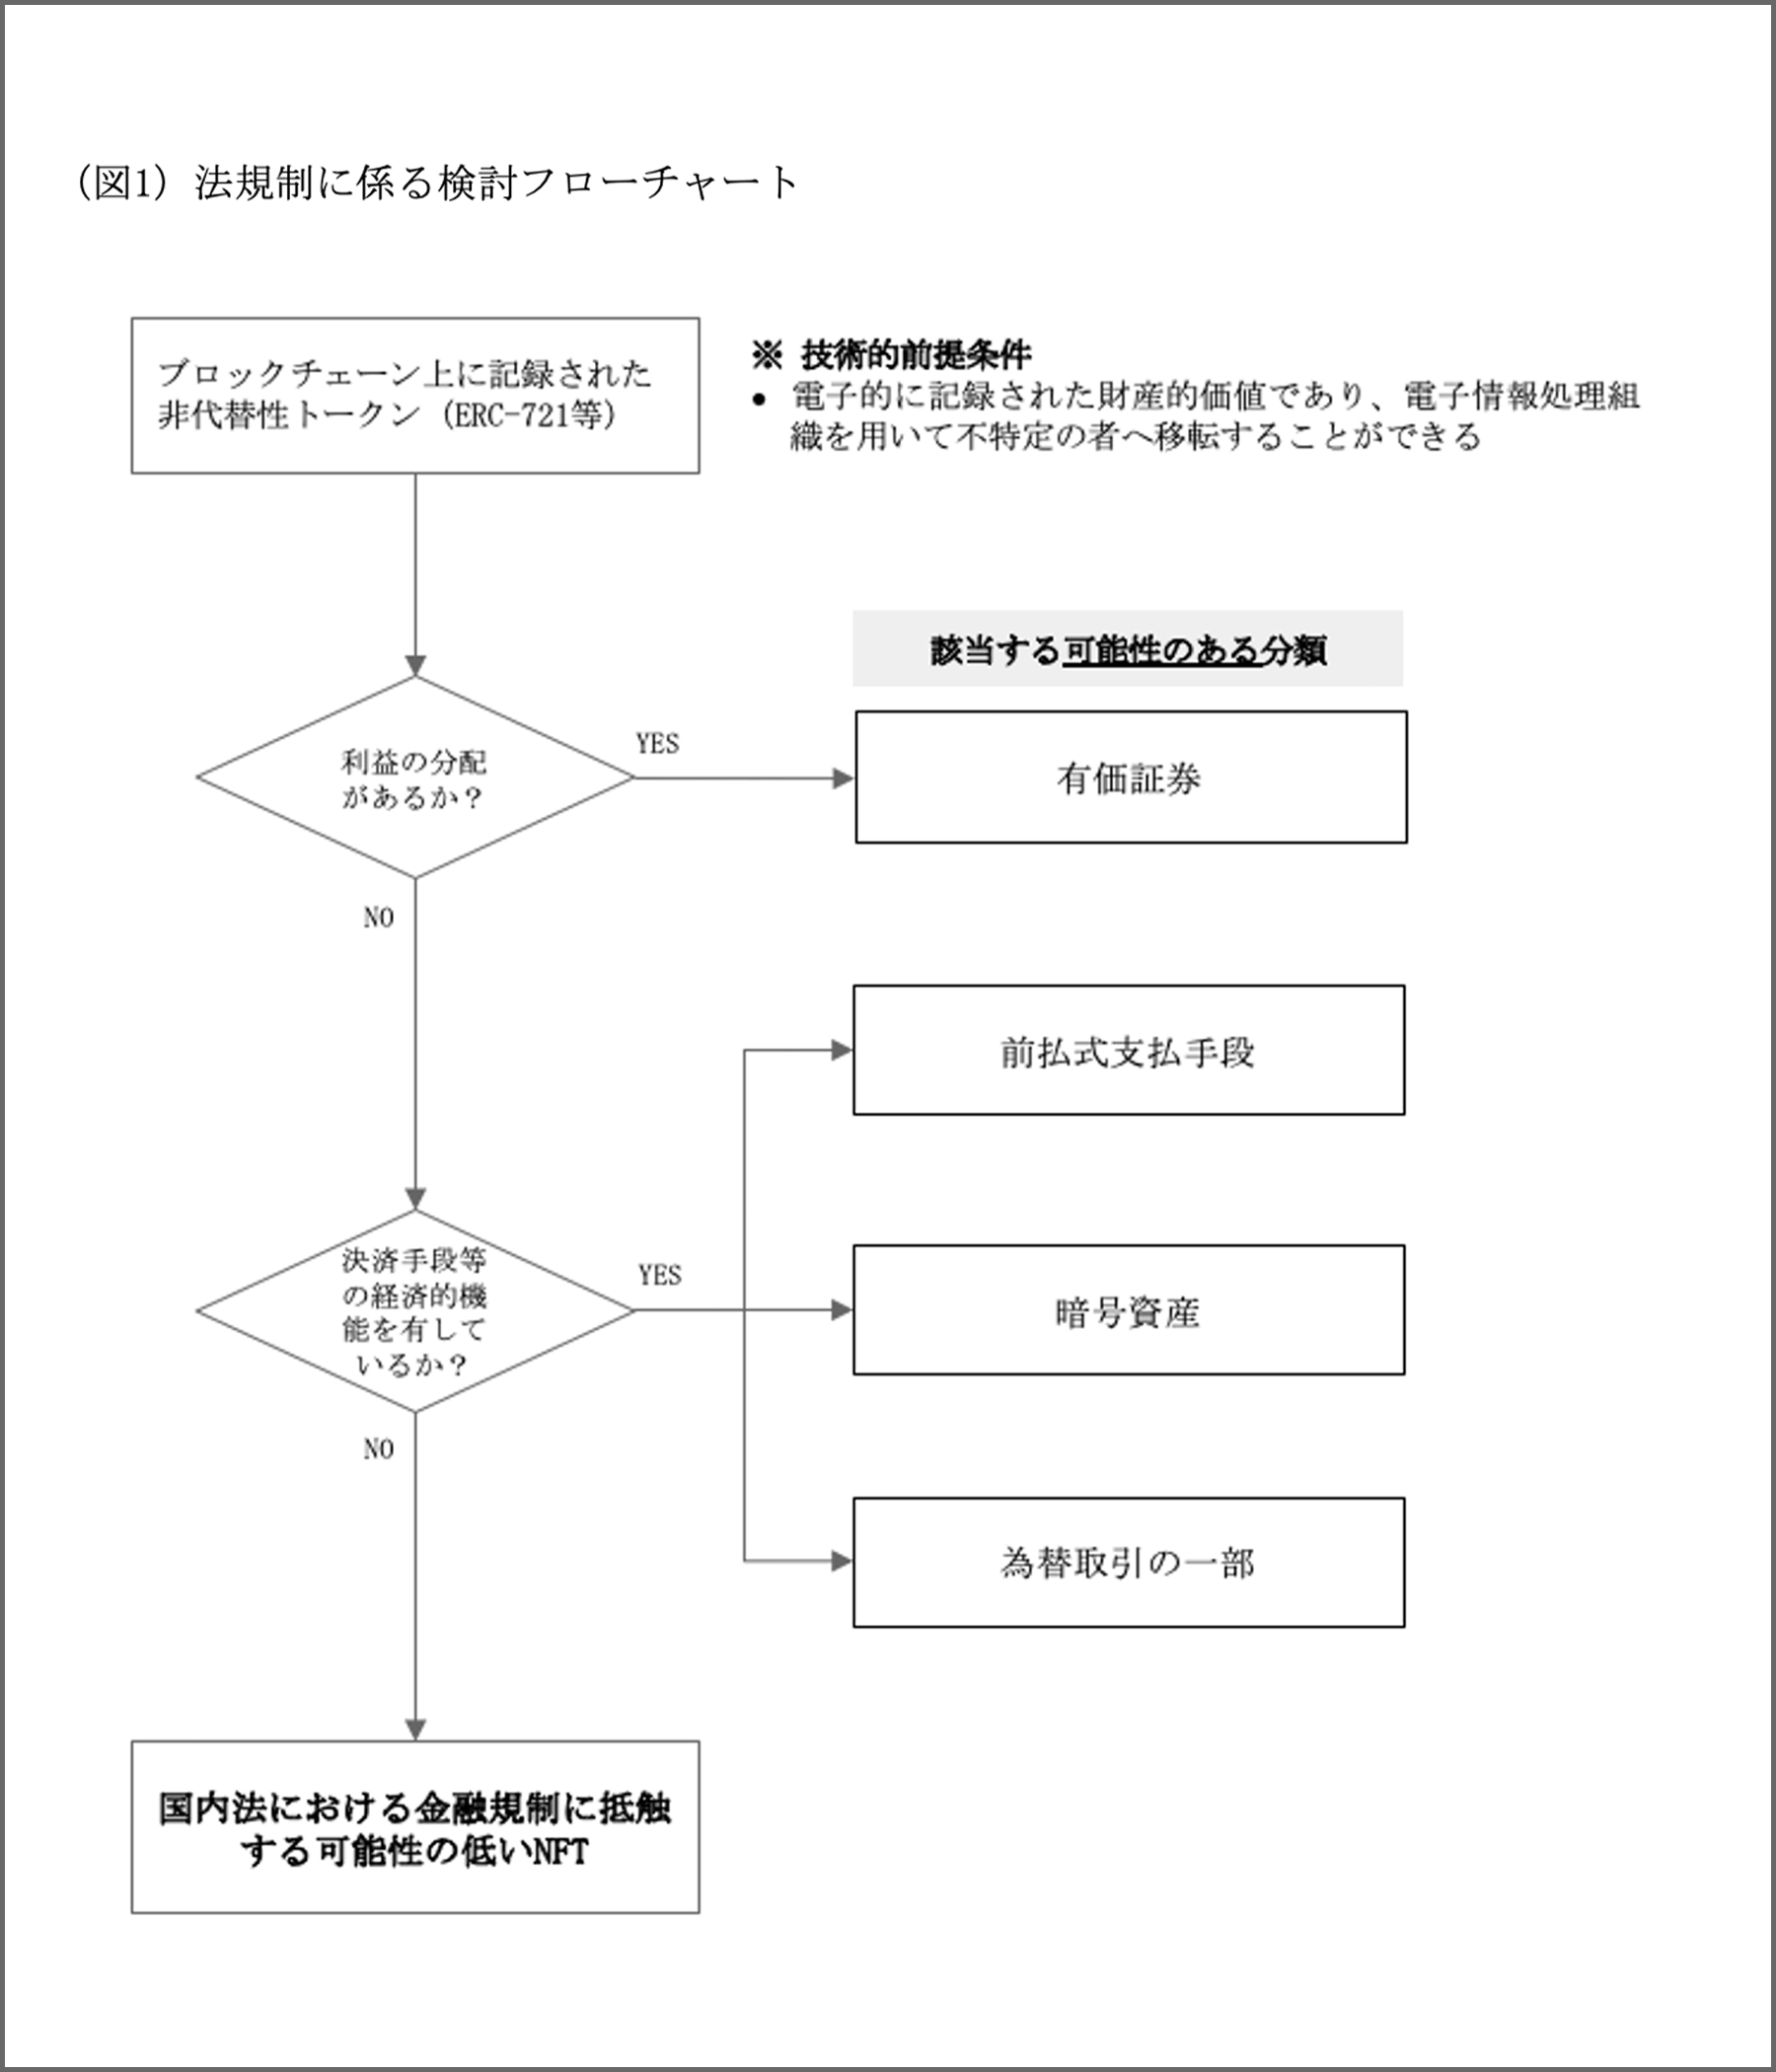 Nftビジネスに関するガイドライン 一般社団法人 日本暗号資産ビジネス協会 Jcba